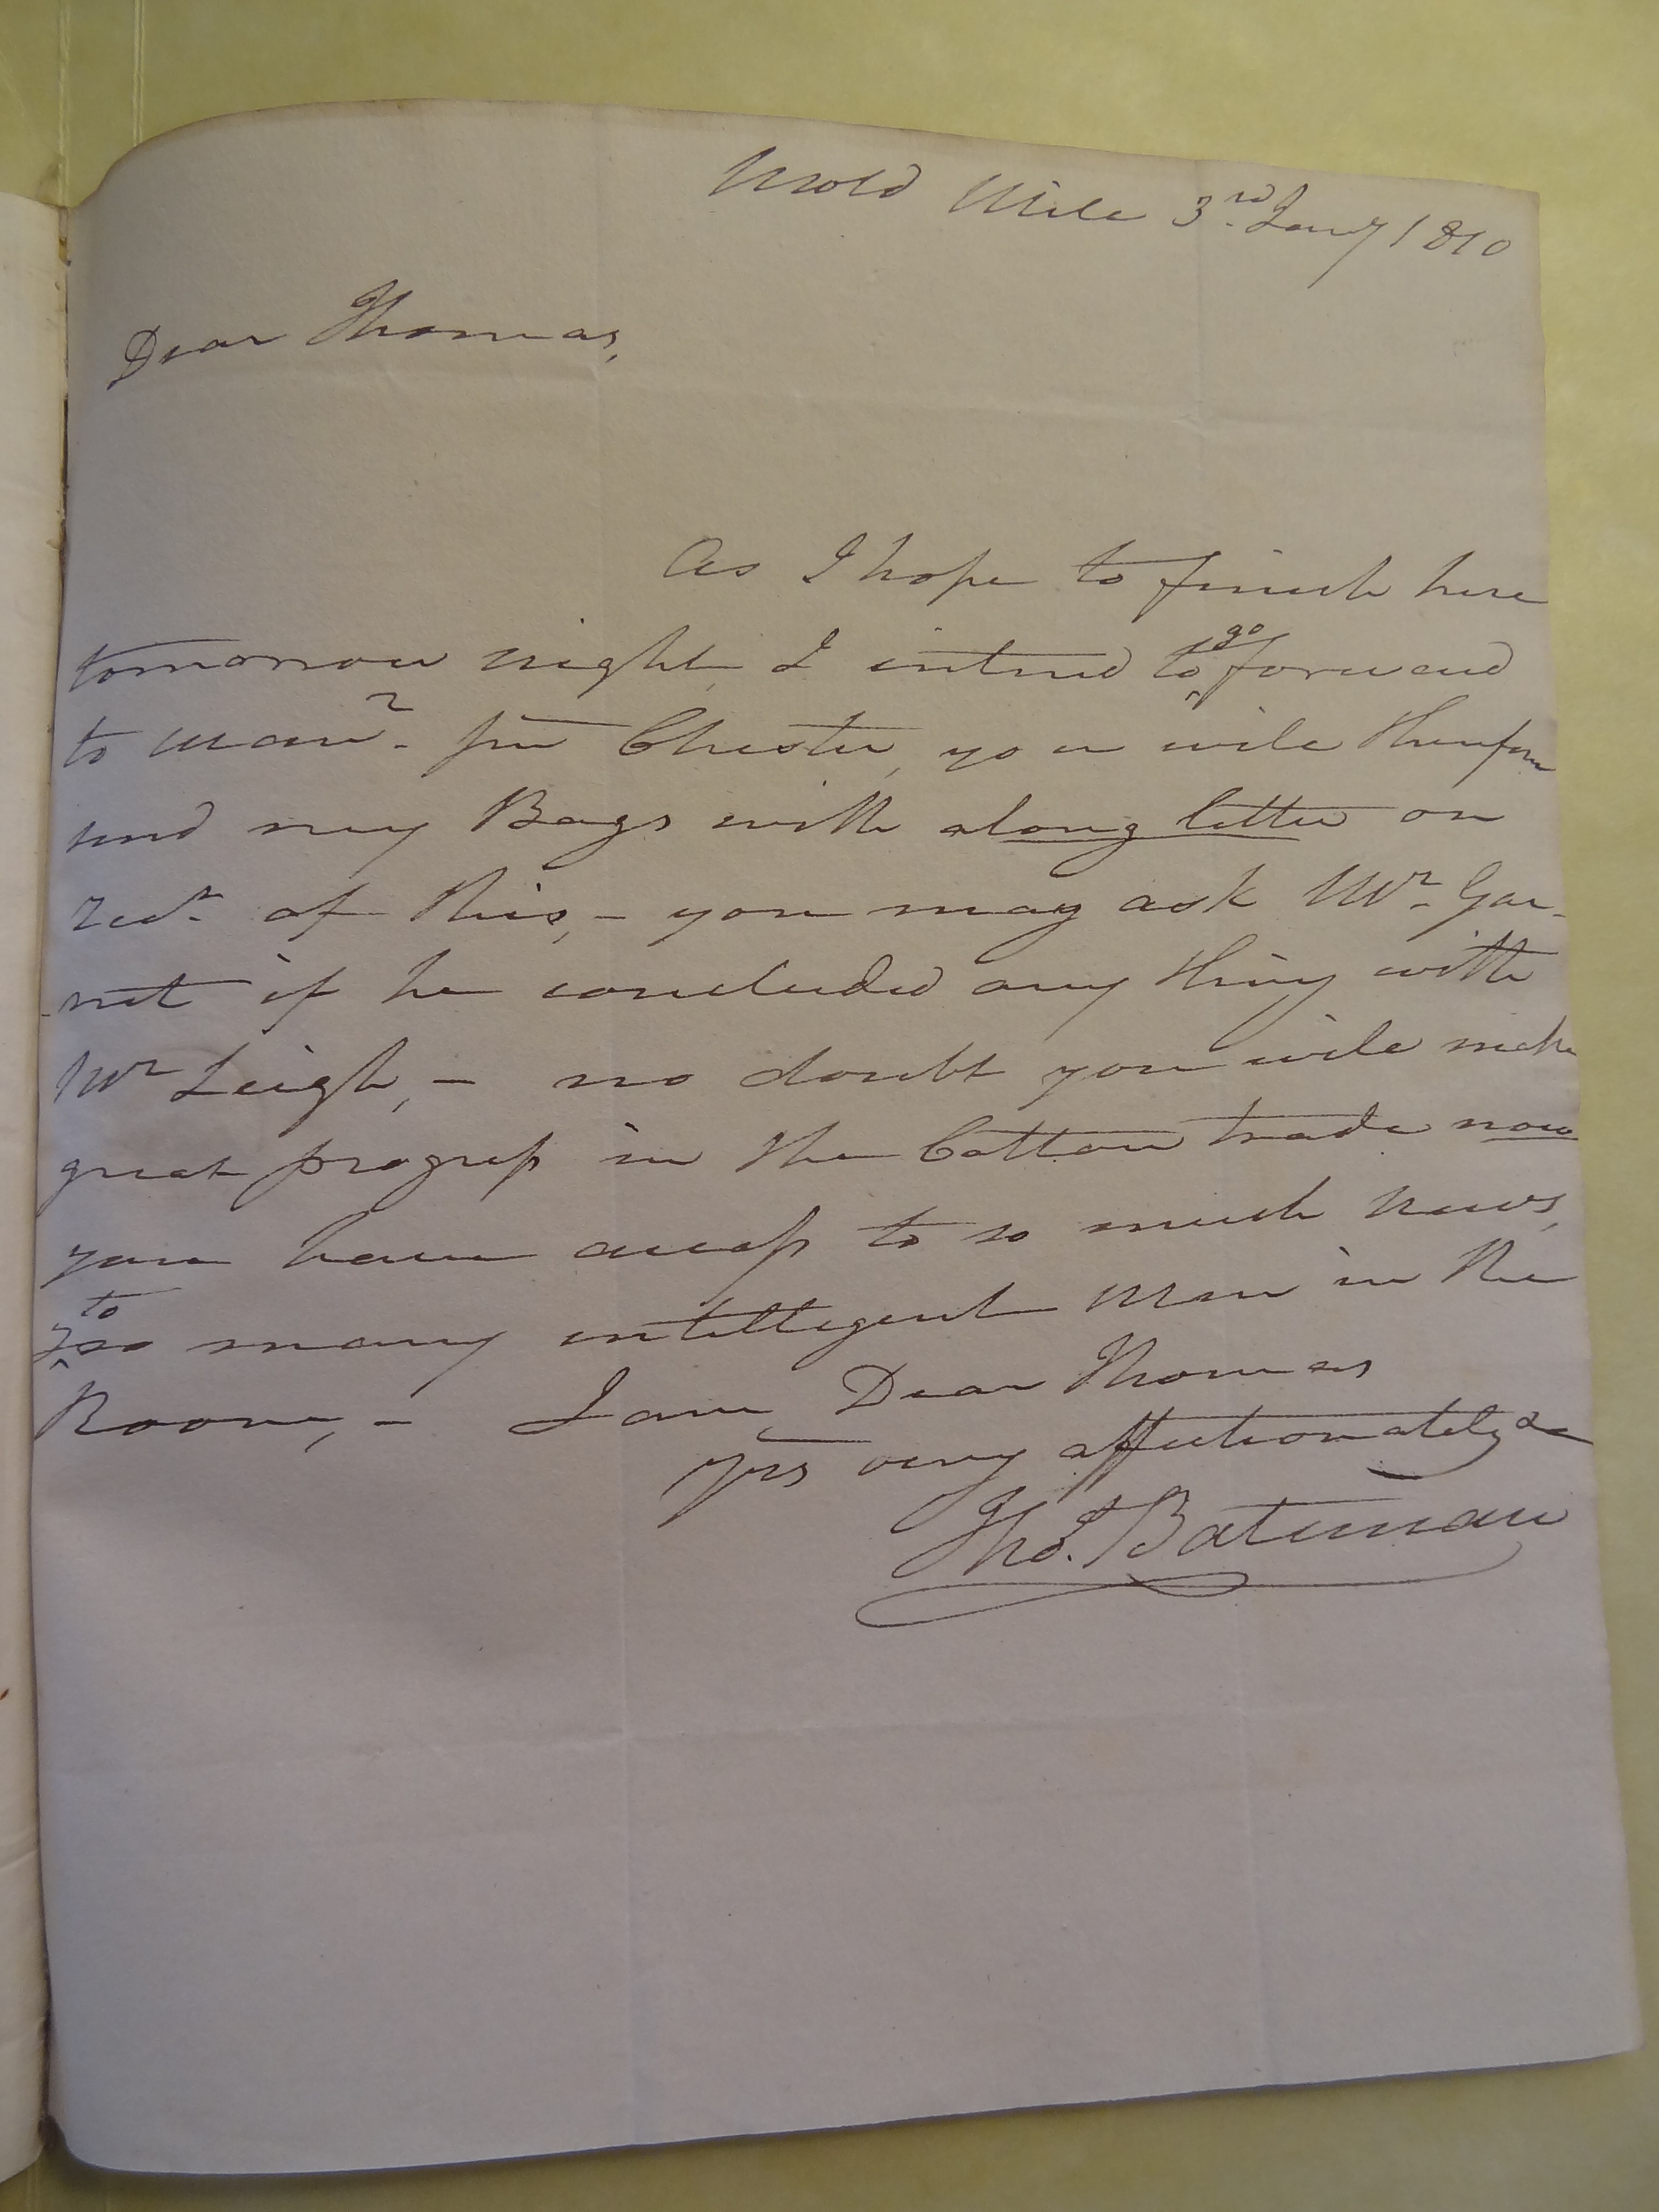 Image #1 of letter: Thomas Bateman (senior) to Thomas Bateman (junior), 3 January 1810